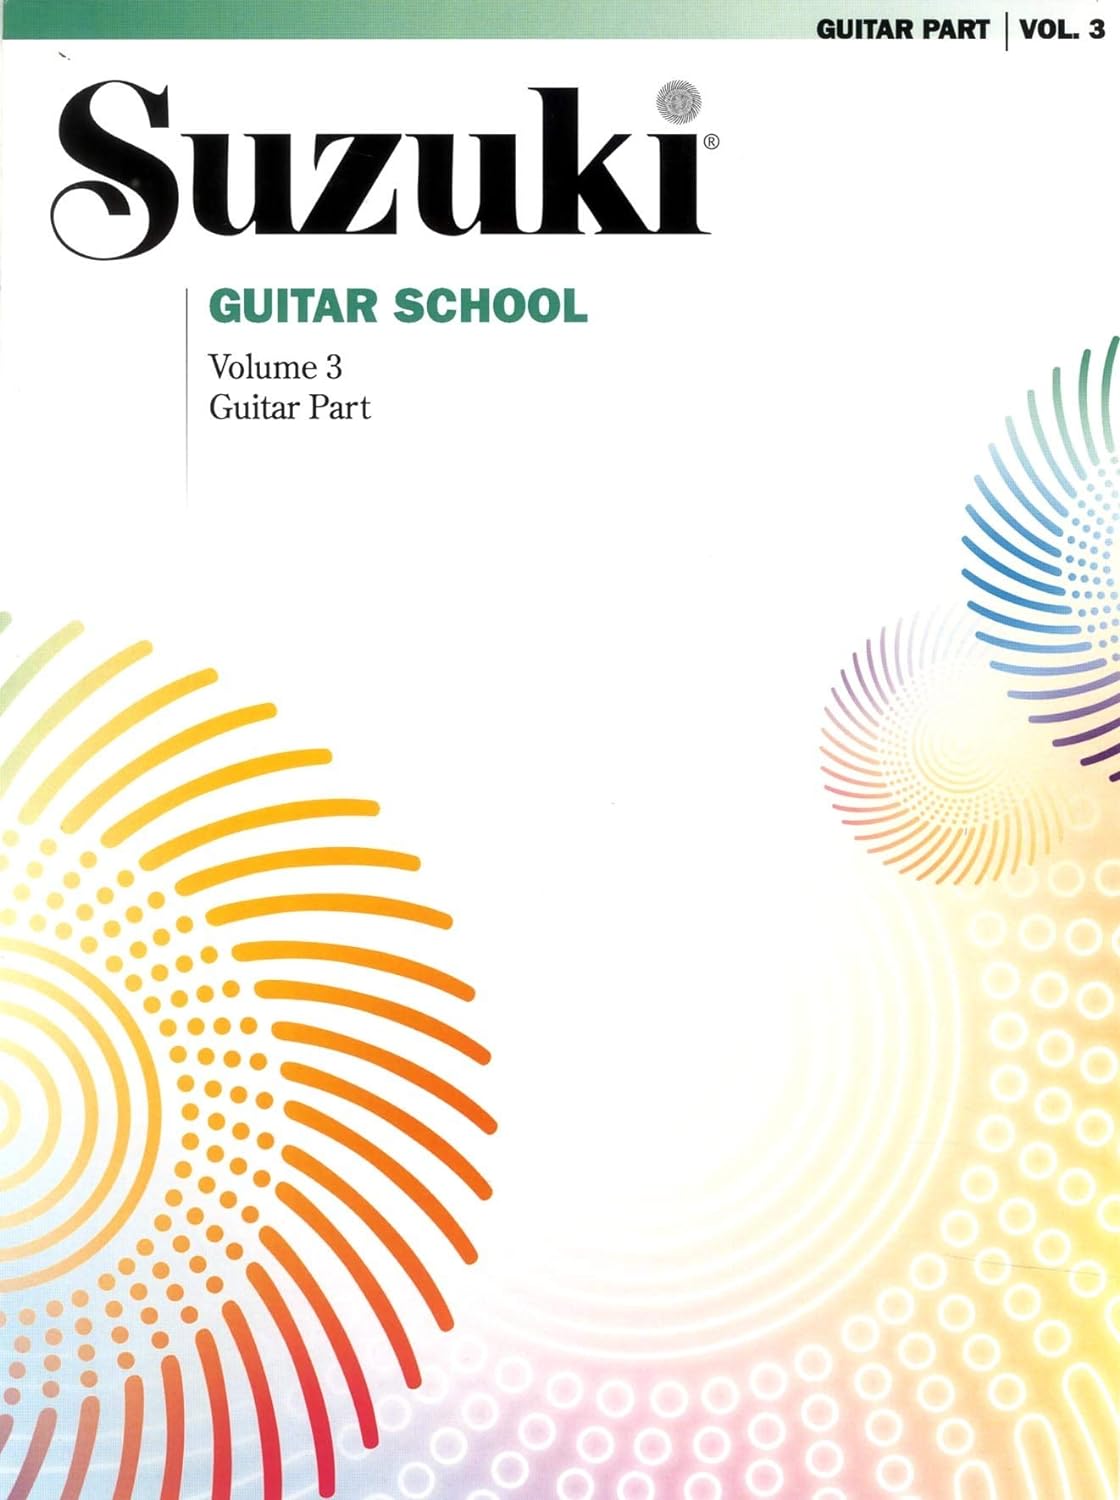 ABRSM Guitar Exams from 2019, G1 (BK/CD) Piano Traders